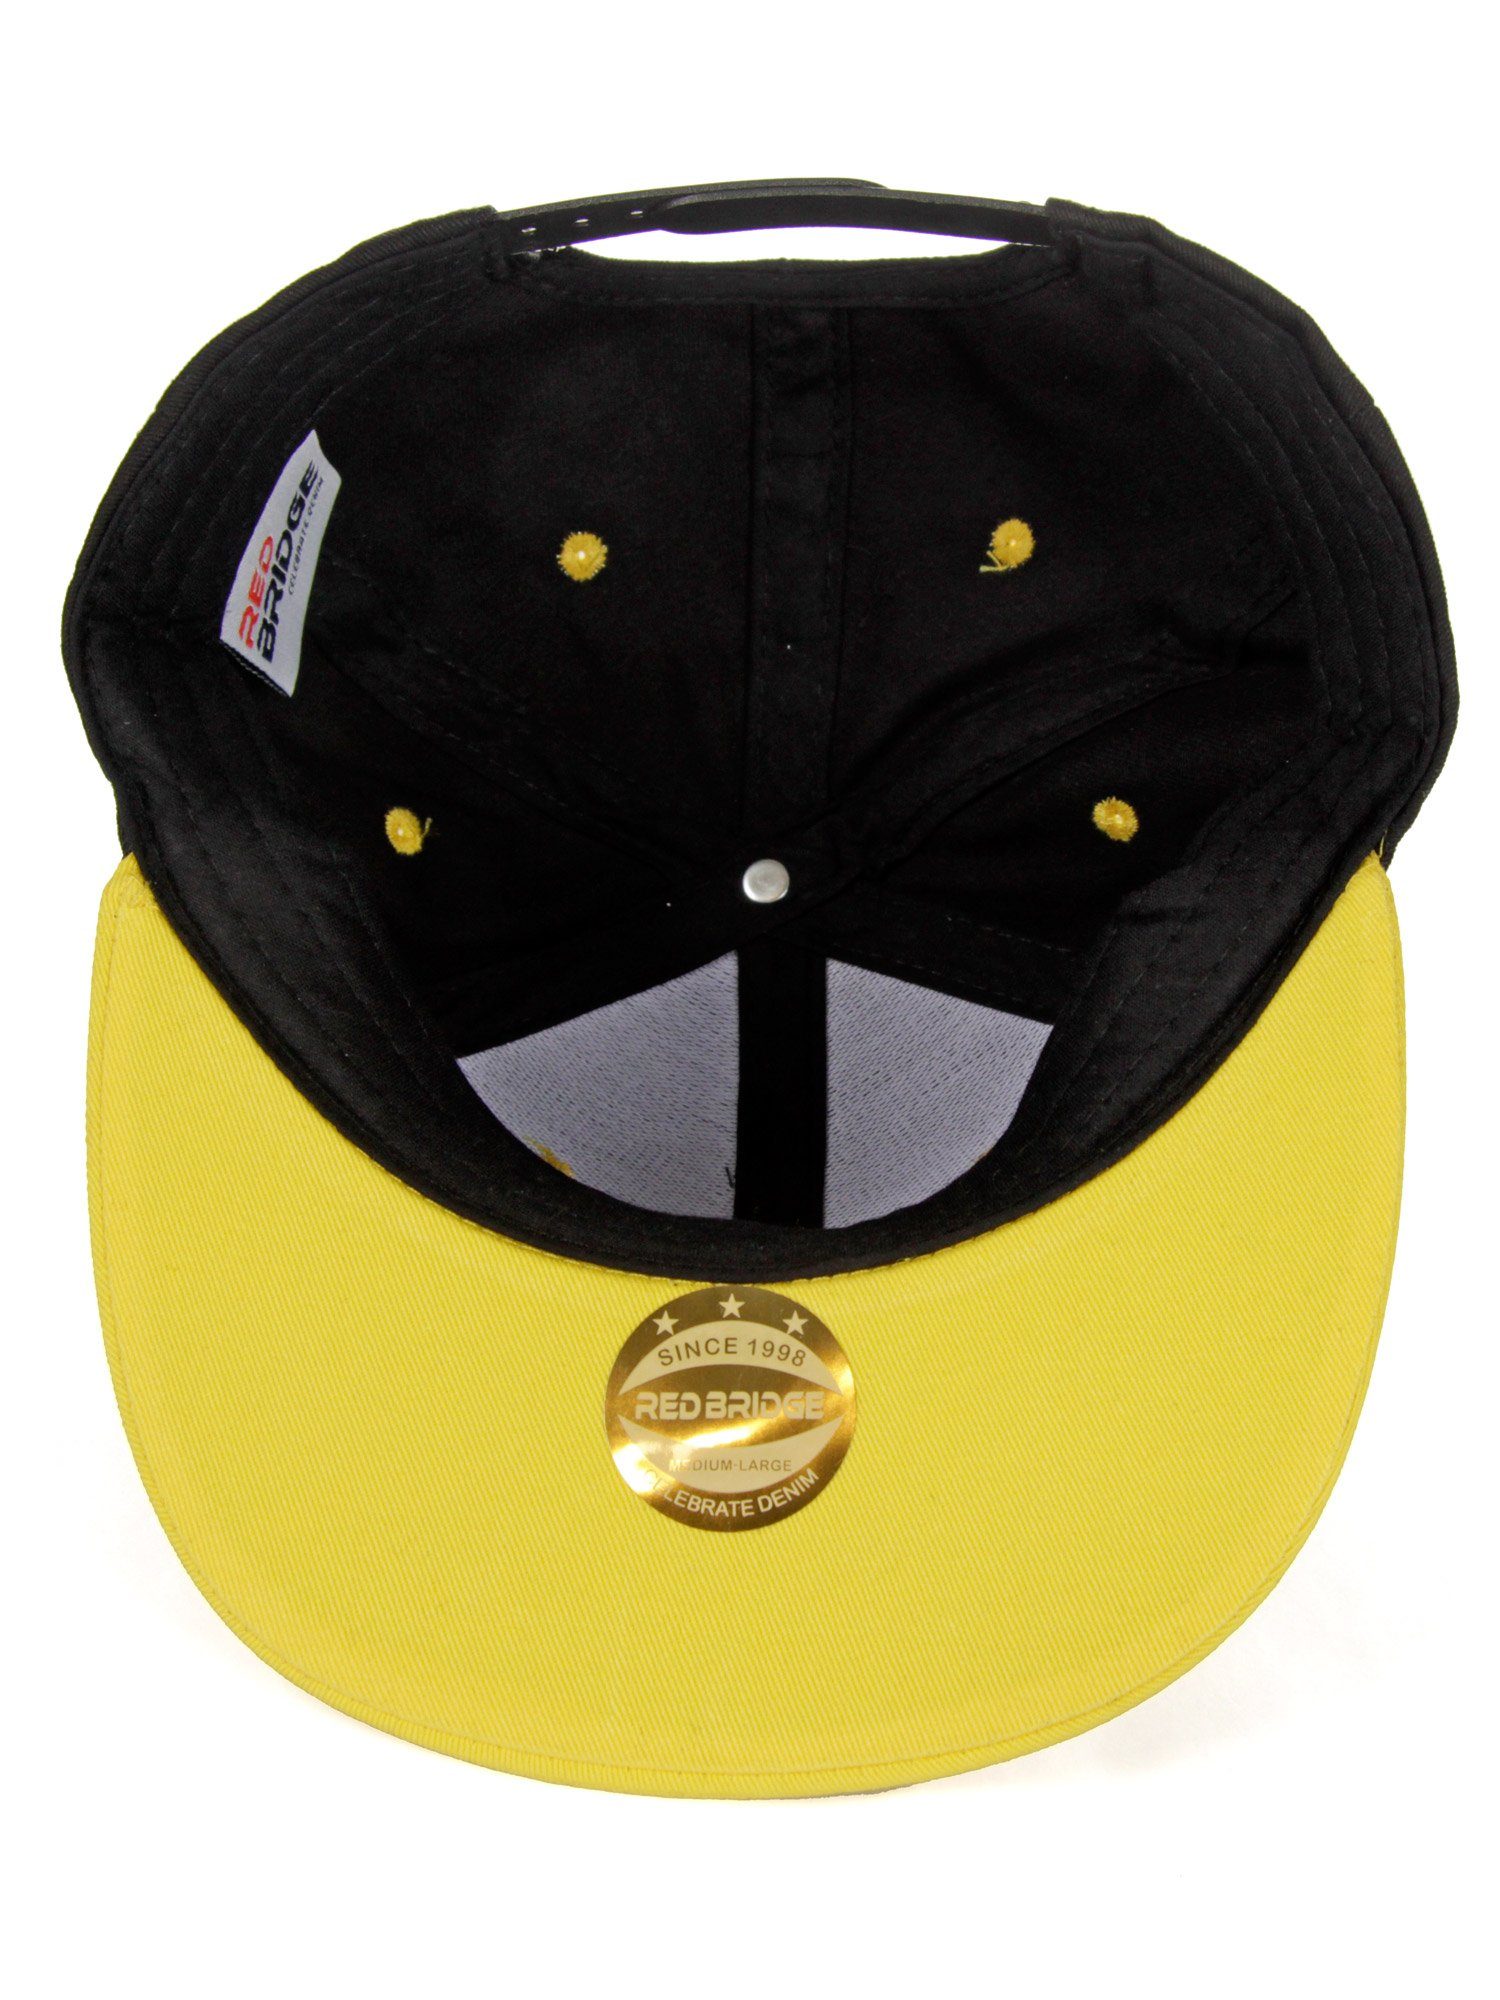 RedBridge Baseball Cap Lancaster mit schwarz-gelb Schirm kontrastfarbigem